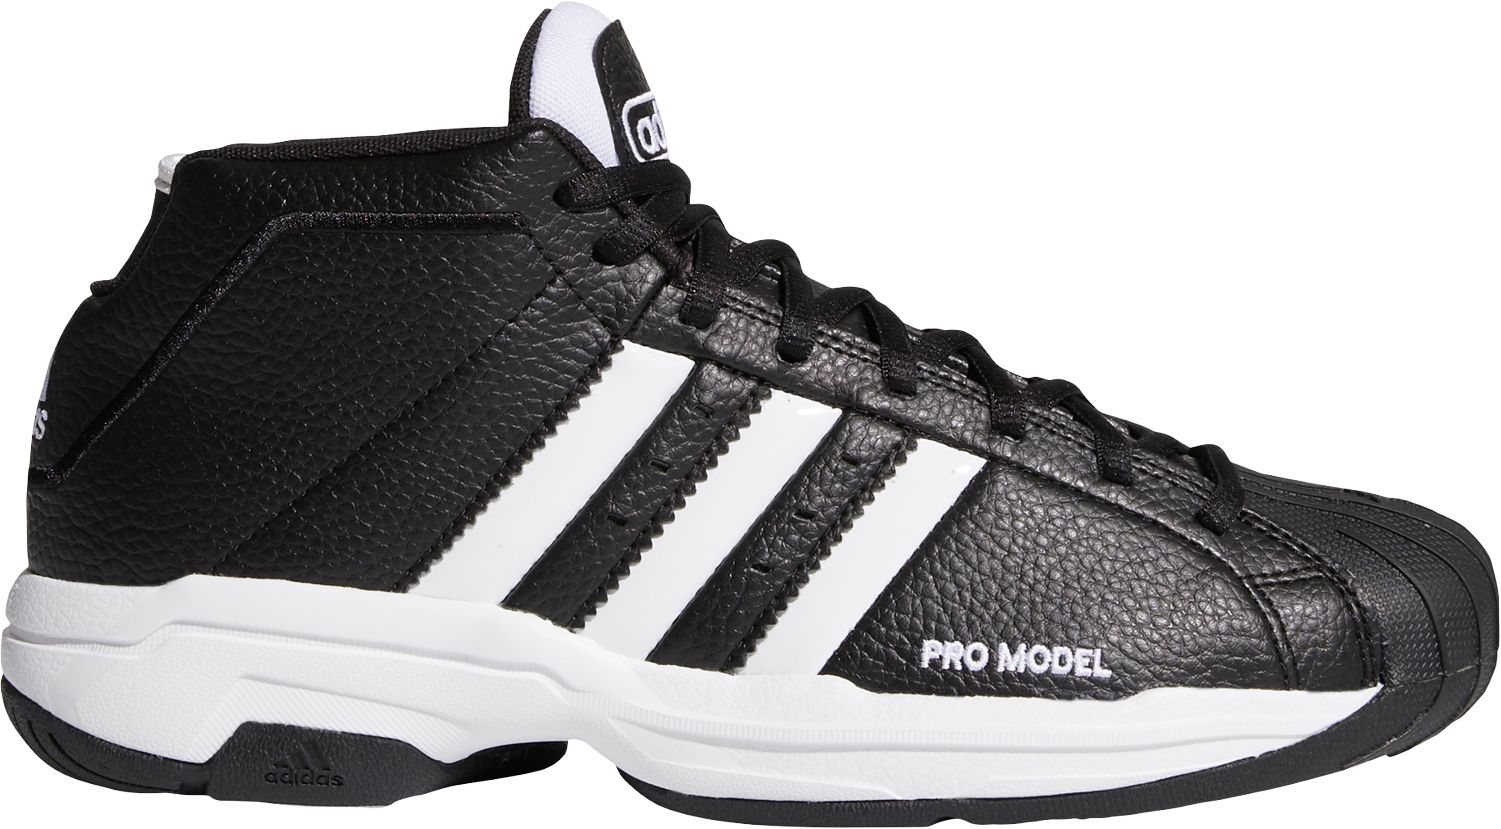 De ninguna manera Suavemente Favor Adidas / Pro Model 2G Basketball Shoes